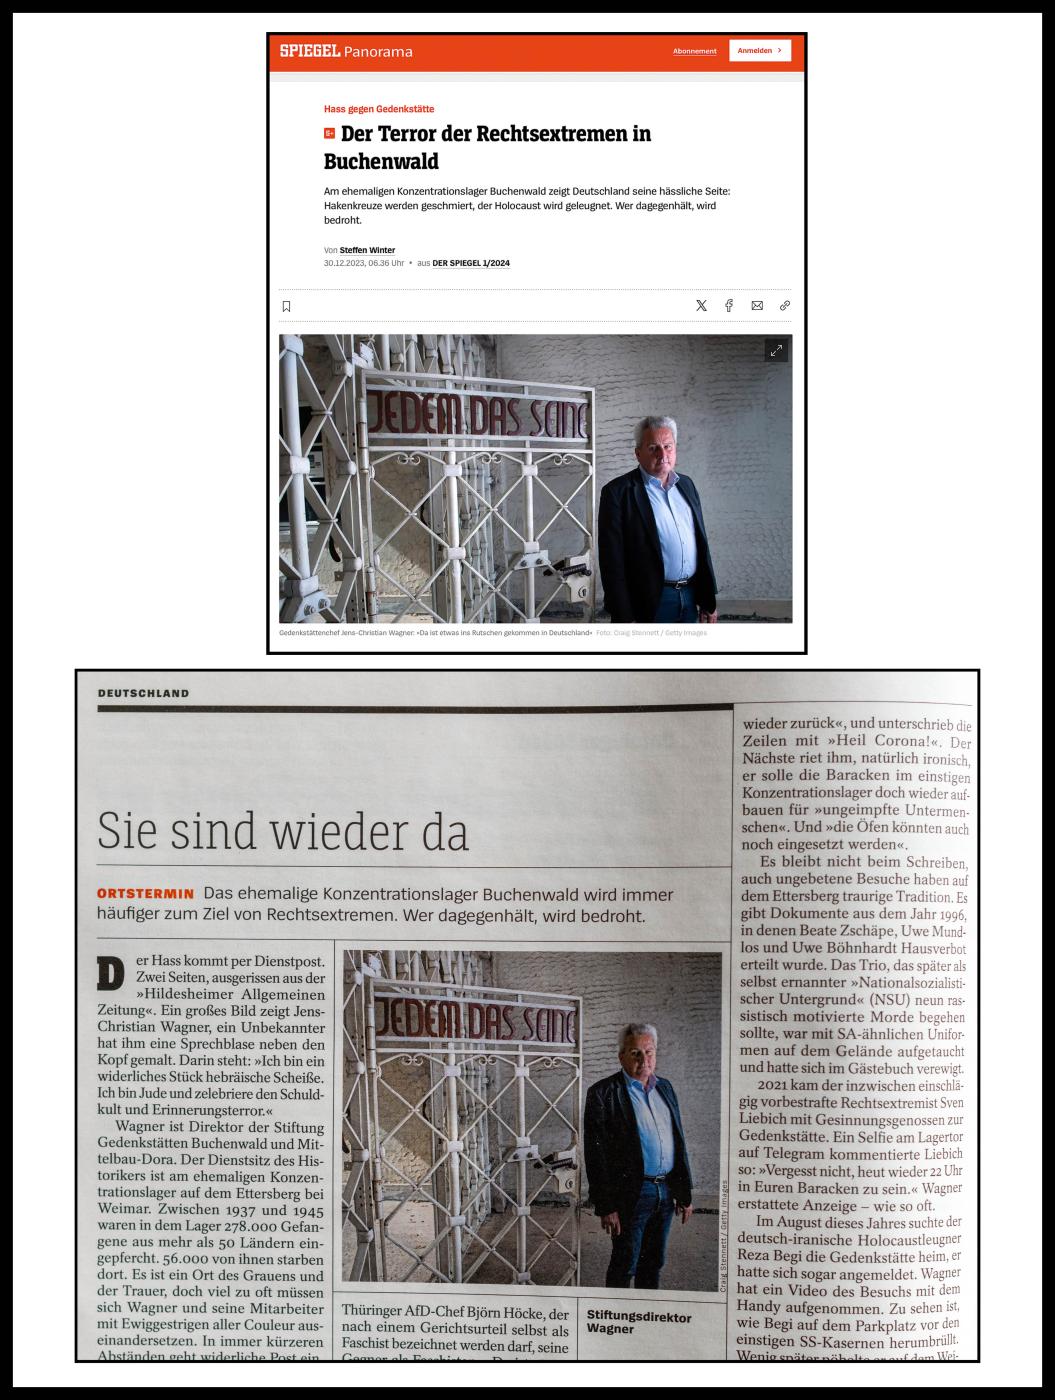  DER SPIEGEL-Germany Online and Print 